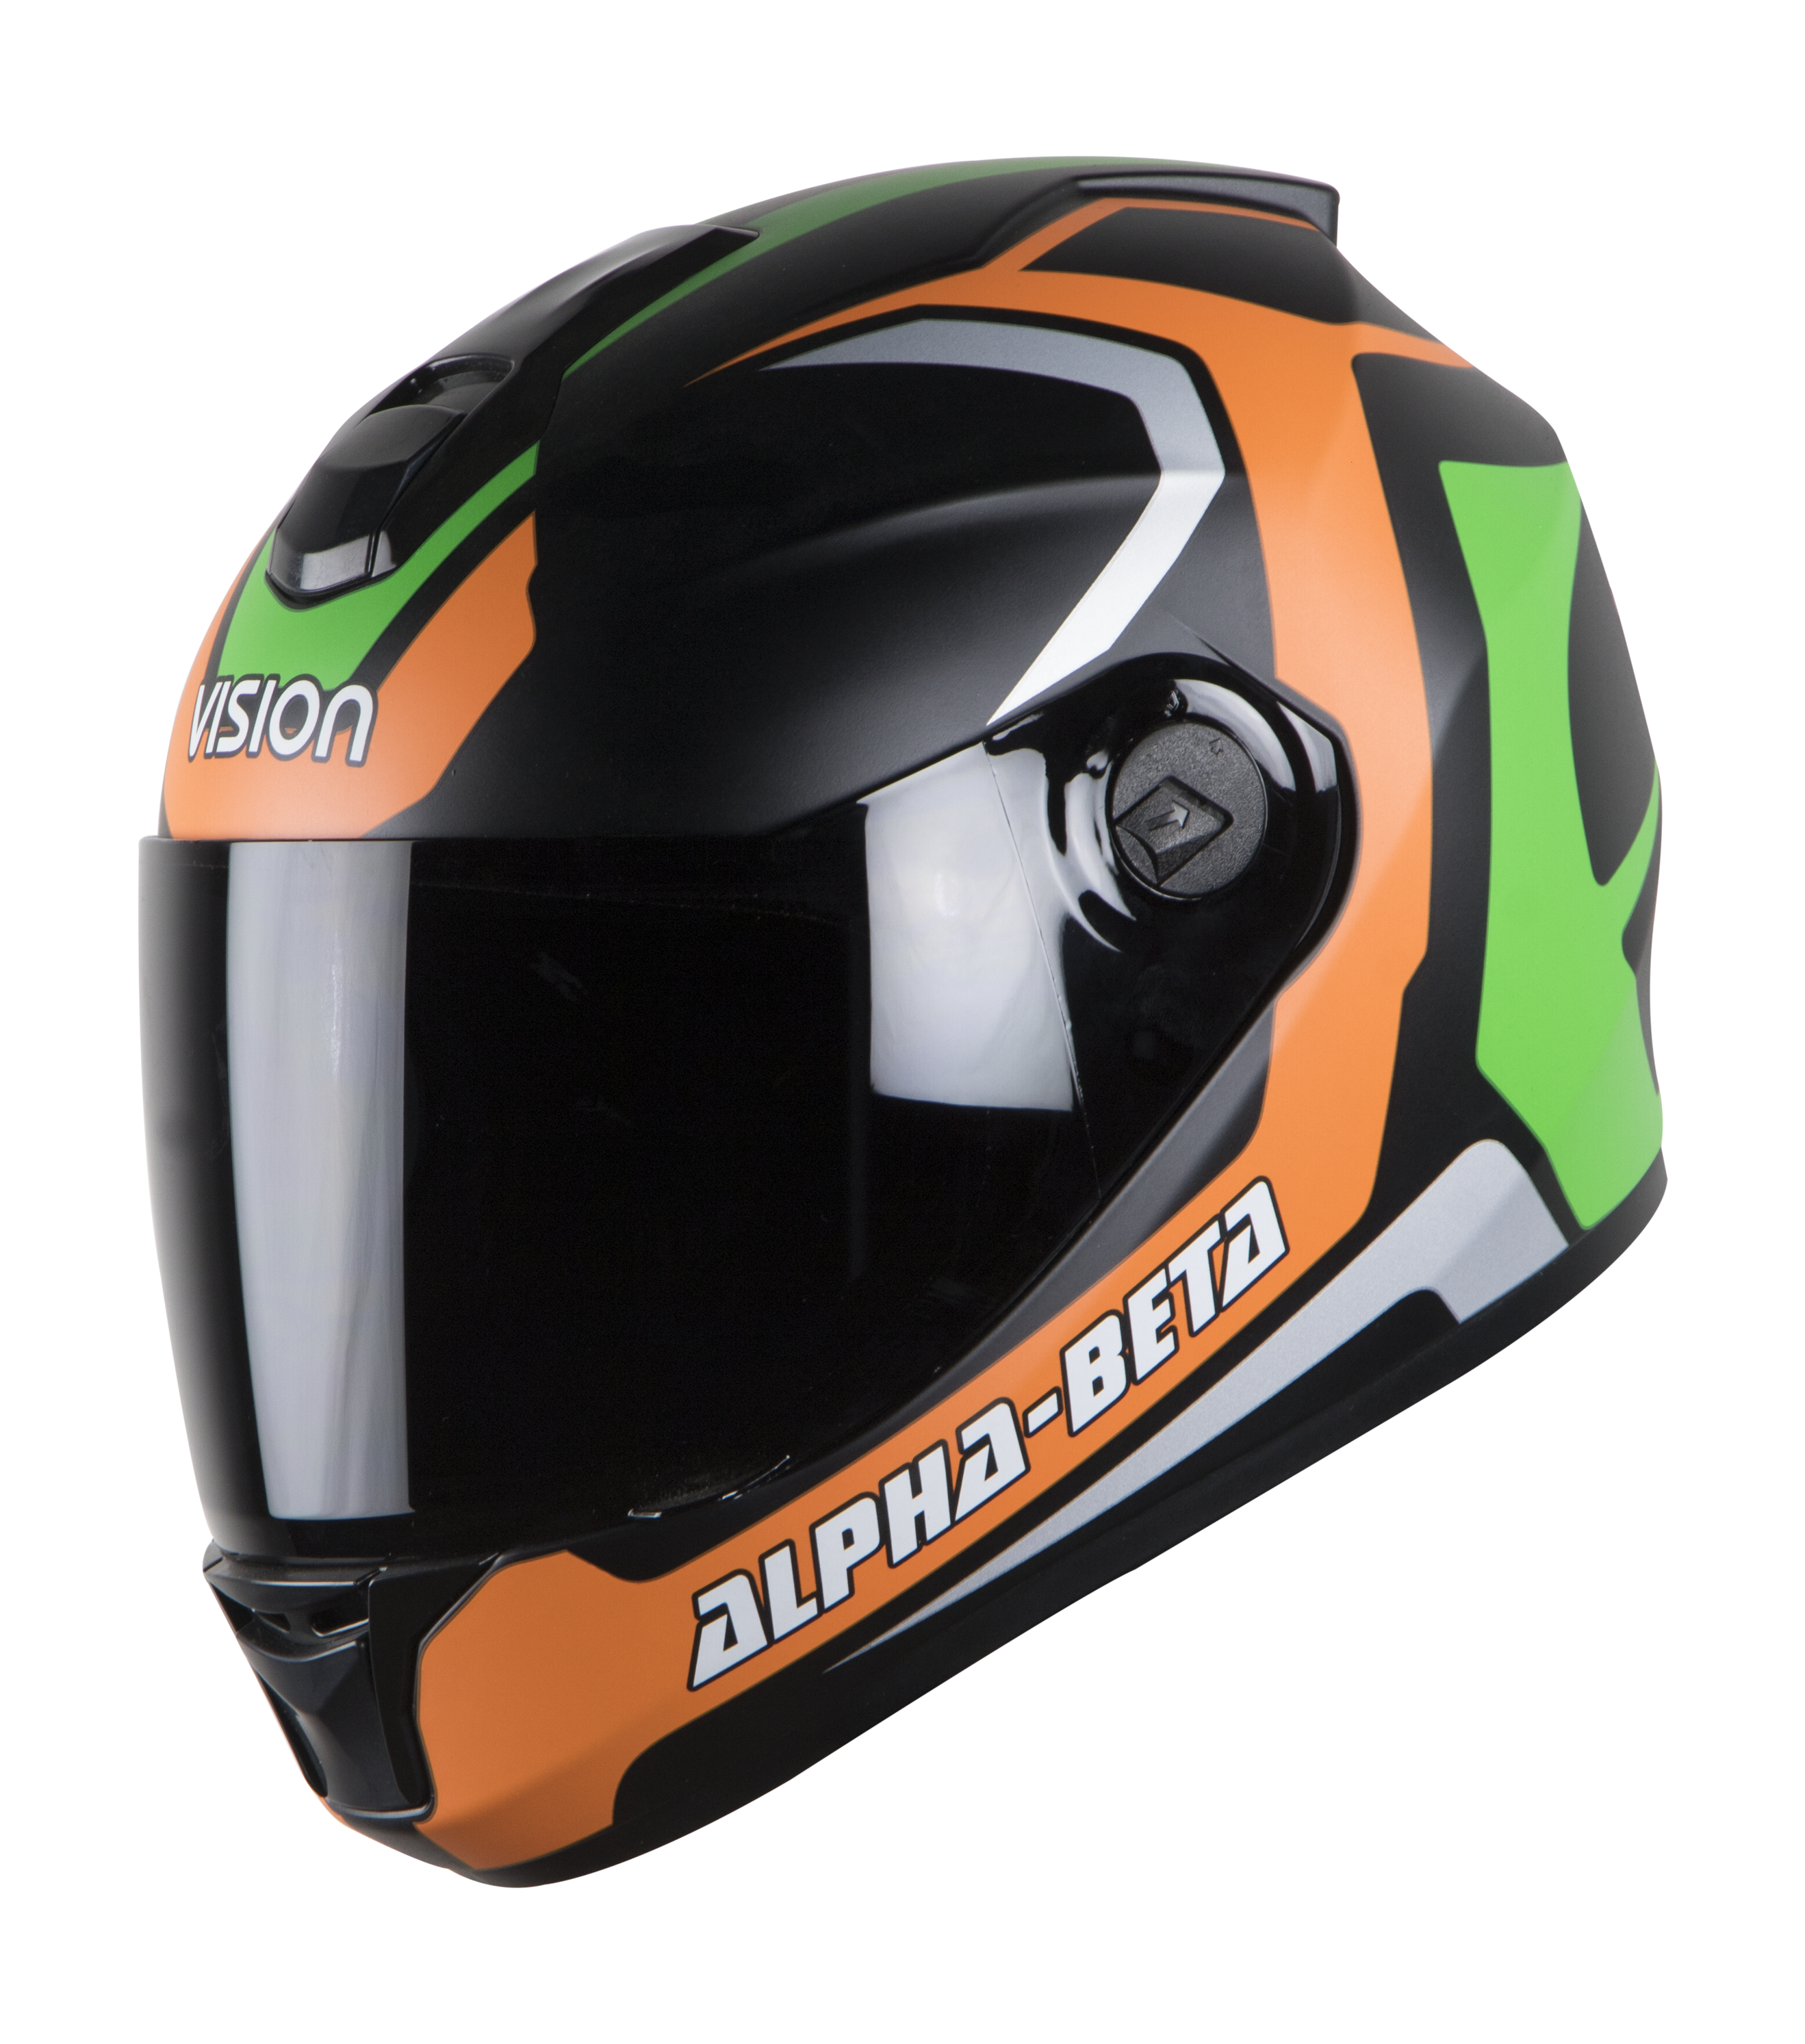 SBH-11 Alpha Beta Mat Orange Green ( Fitted With Clear Visor Extra Smoke Visor Free)